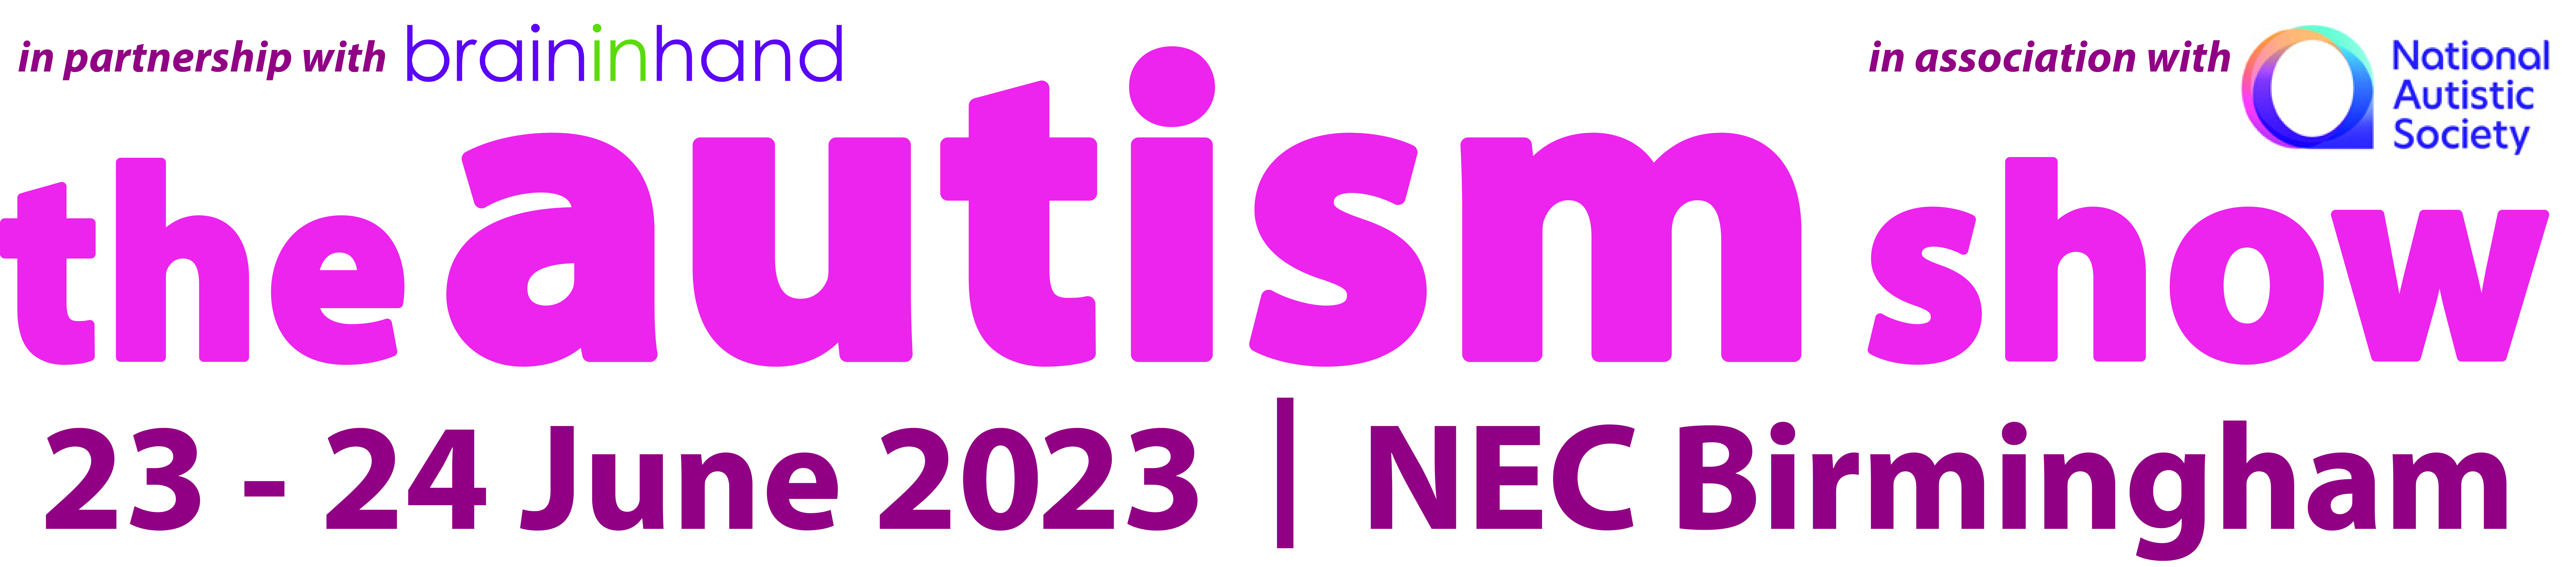 Autism Show Birmingham logo